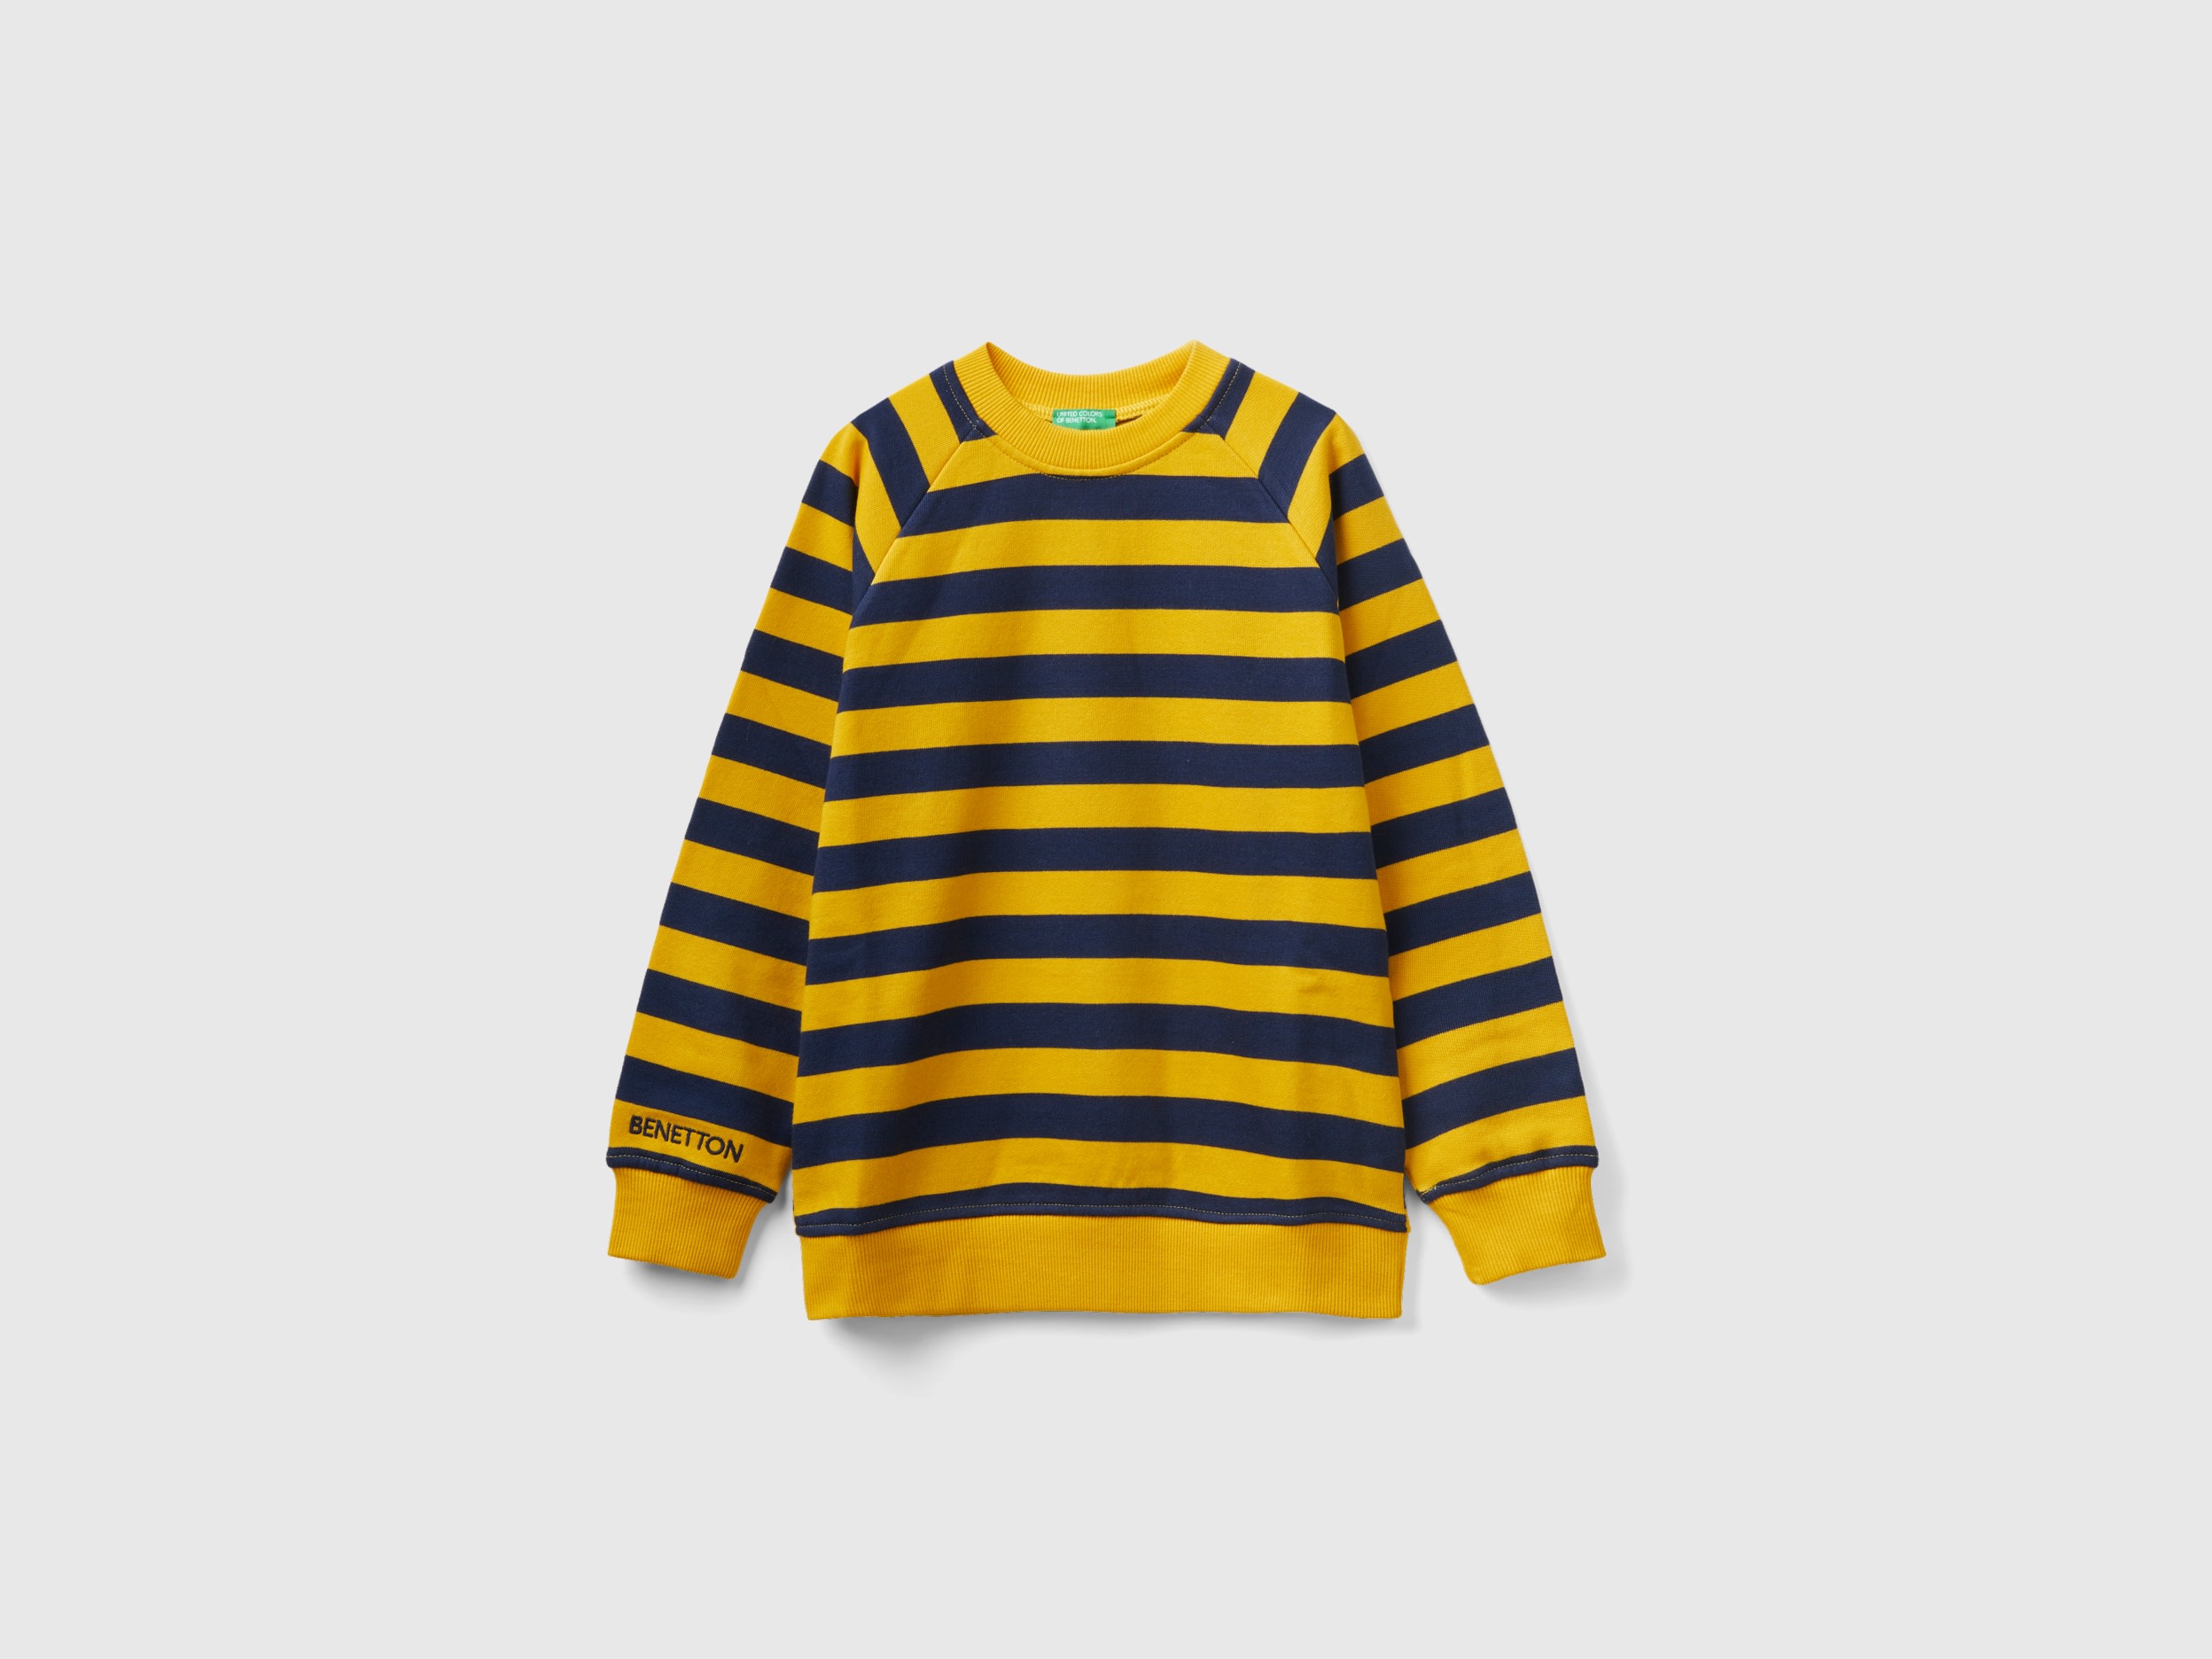 Benetton, Yellow Ochre And Dark Blue Striped Sweatshirt, size S, Multi-color, Kids